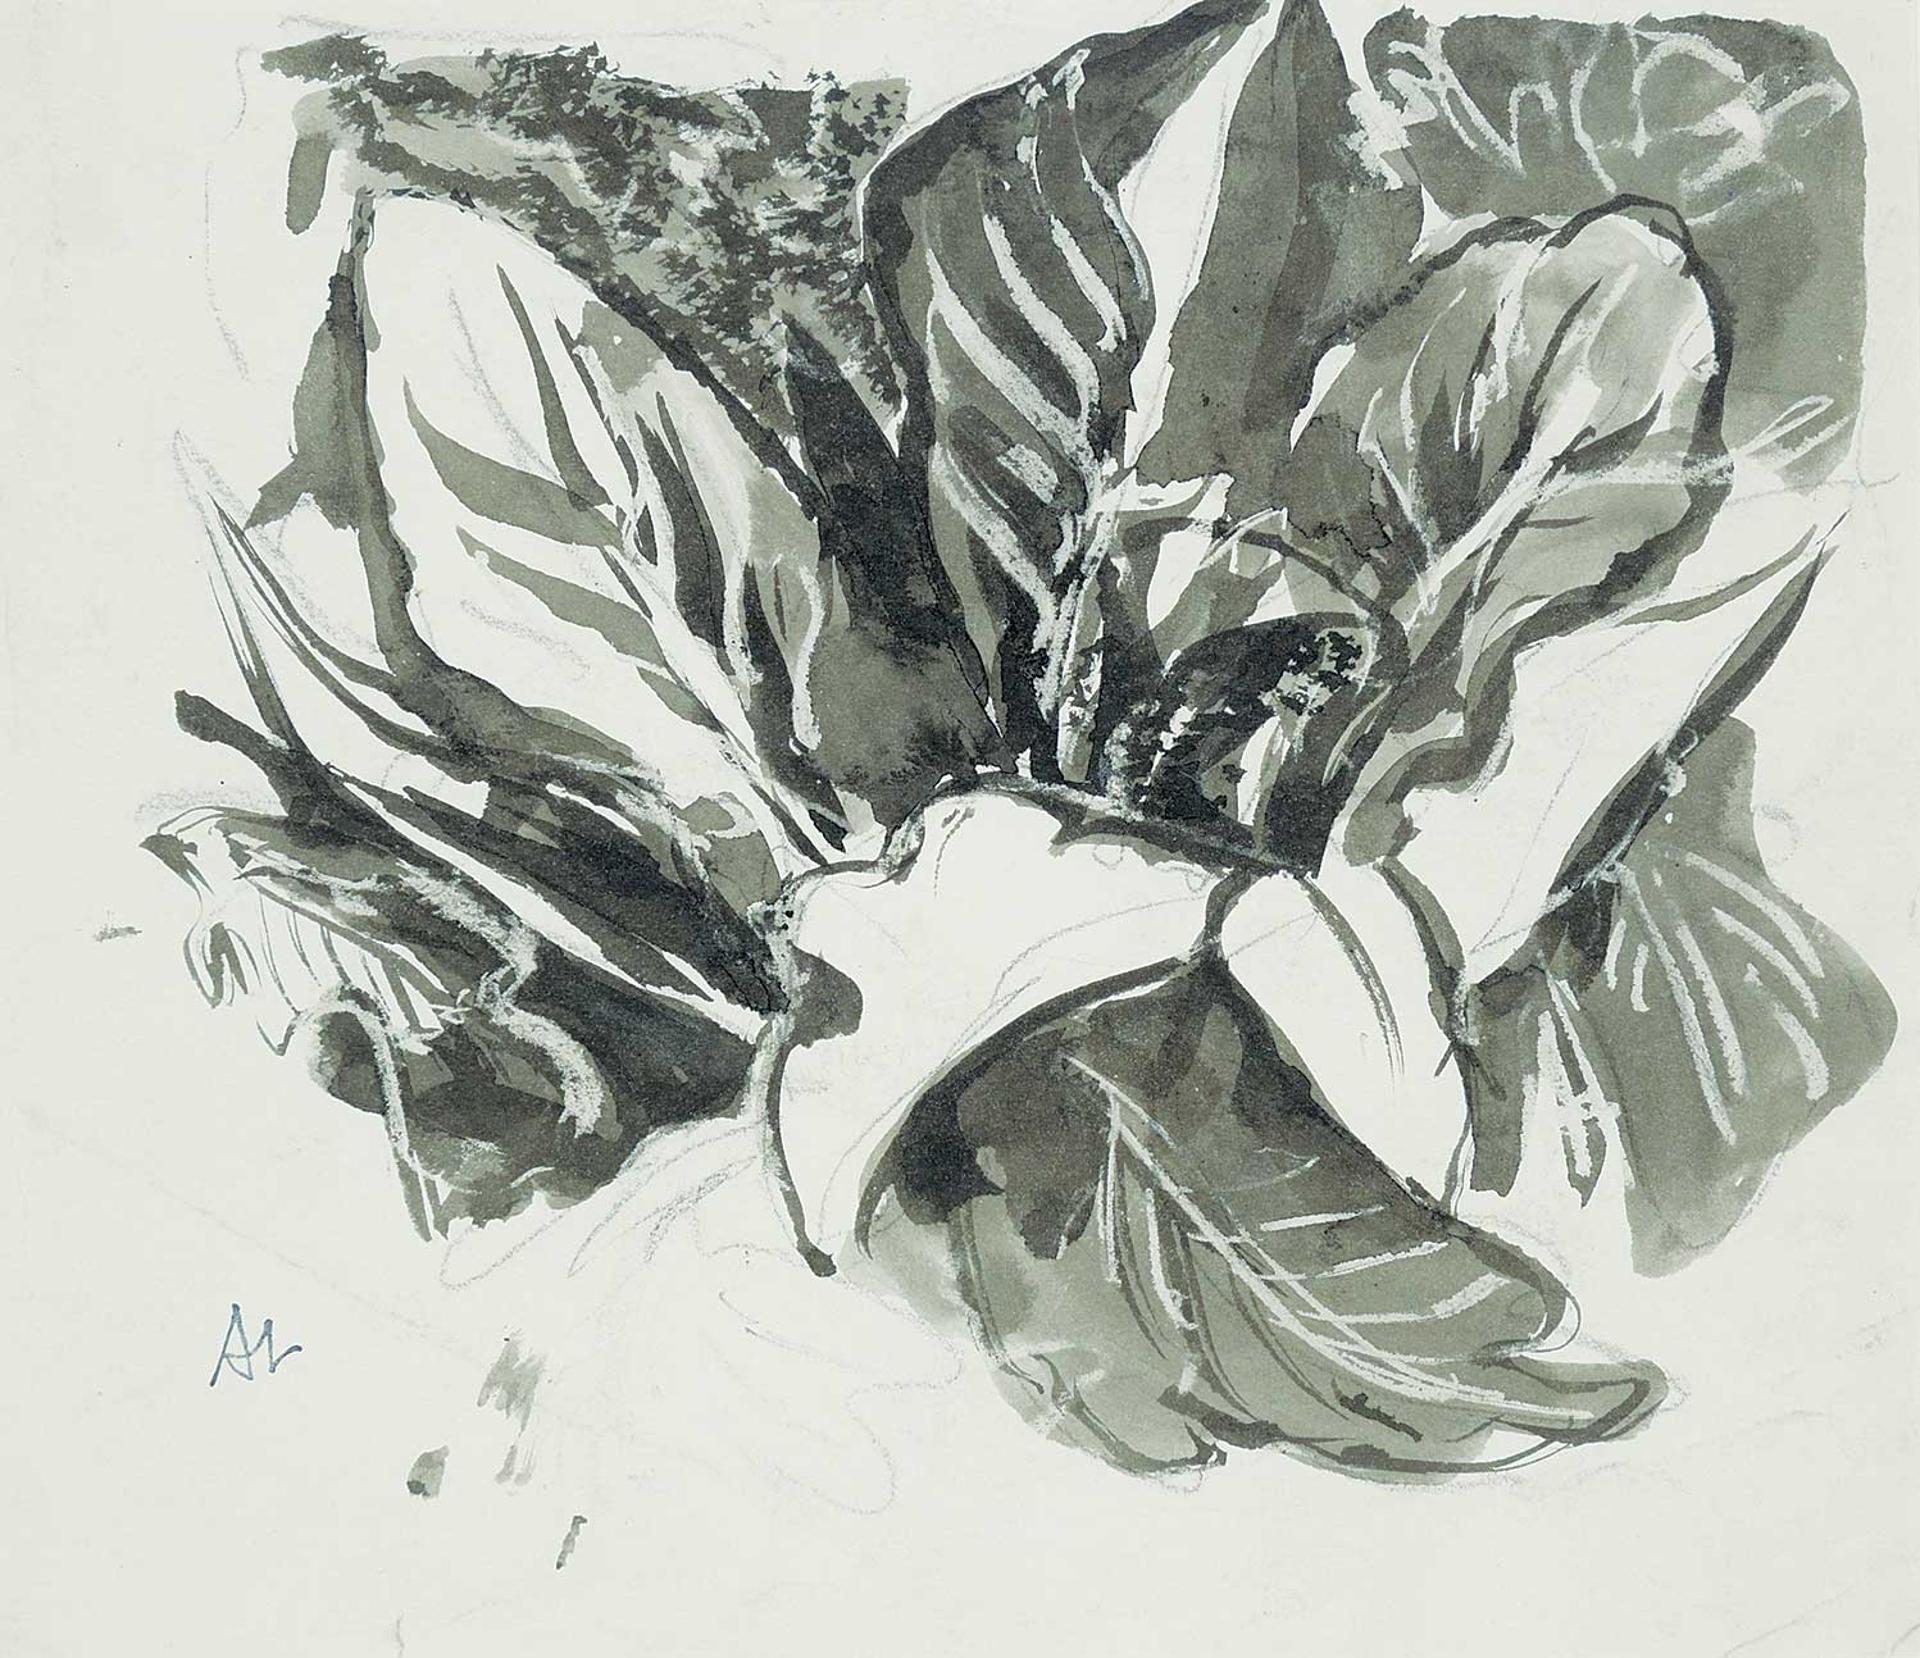 Arthur Lismer (1885-1969) - Untitled - Skunk Cabbage Study